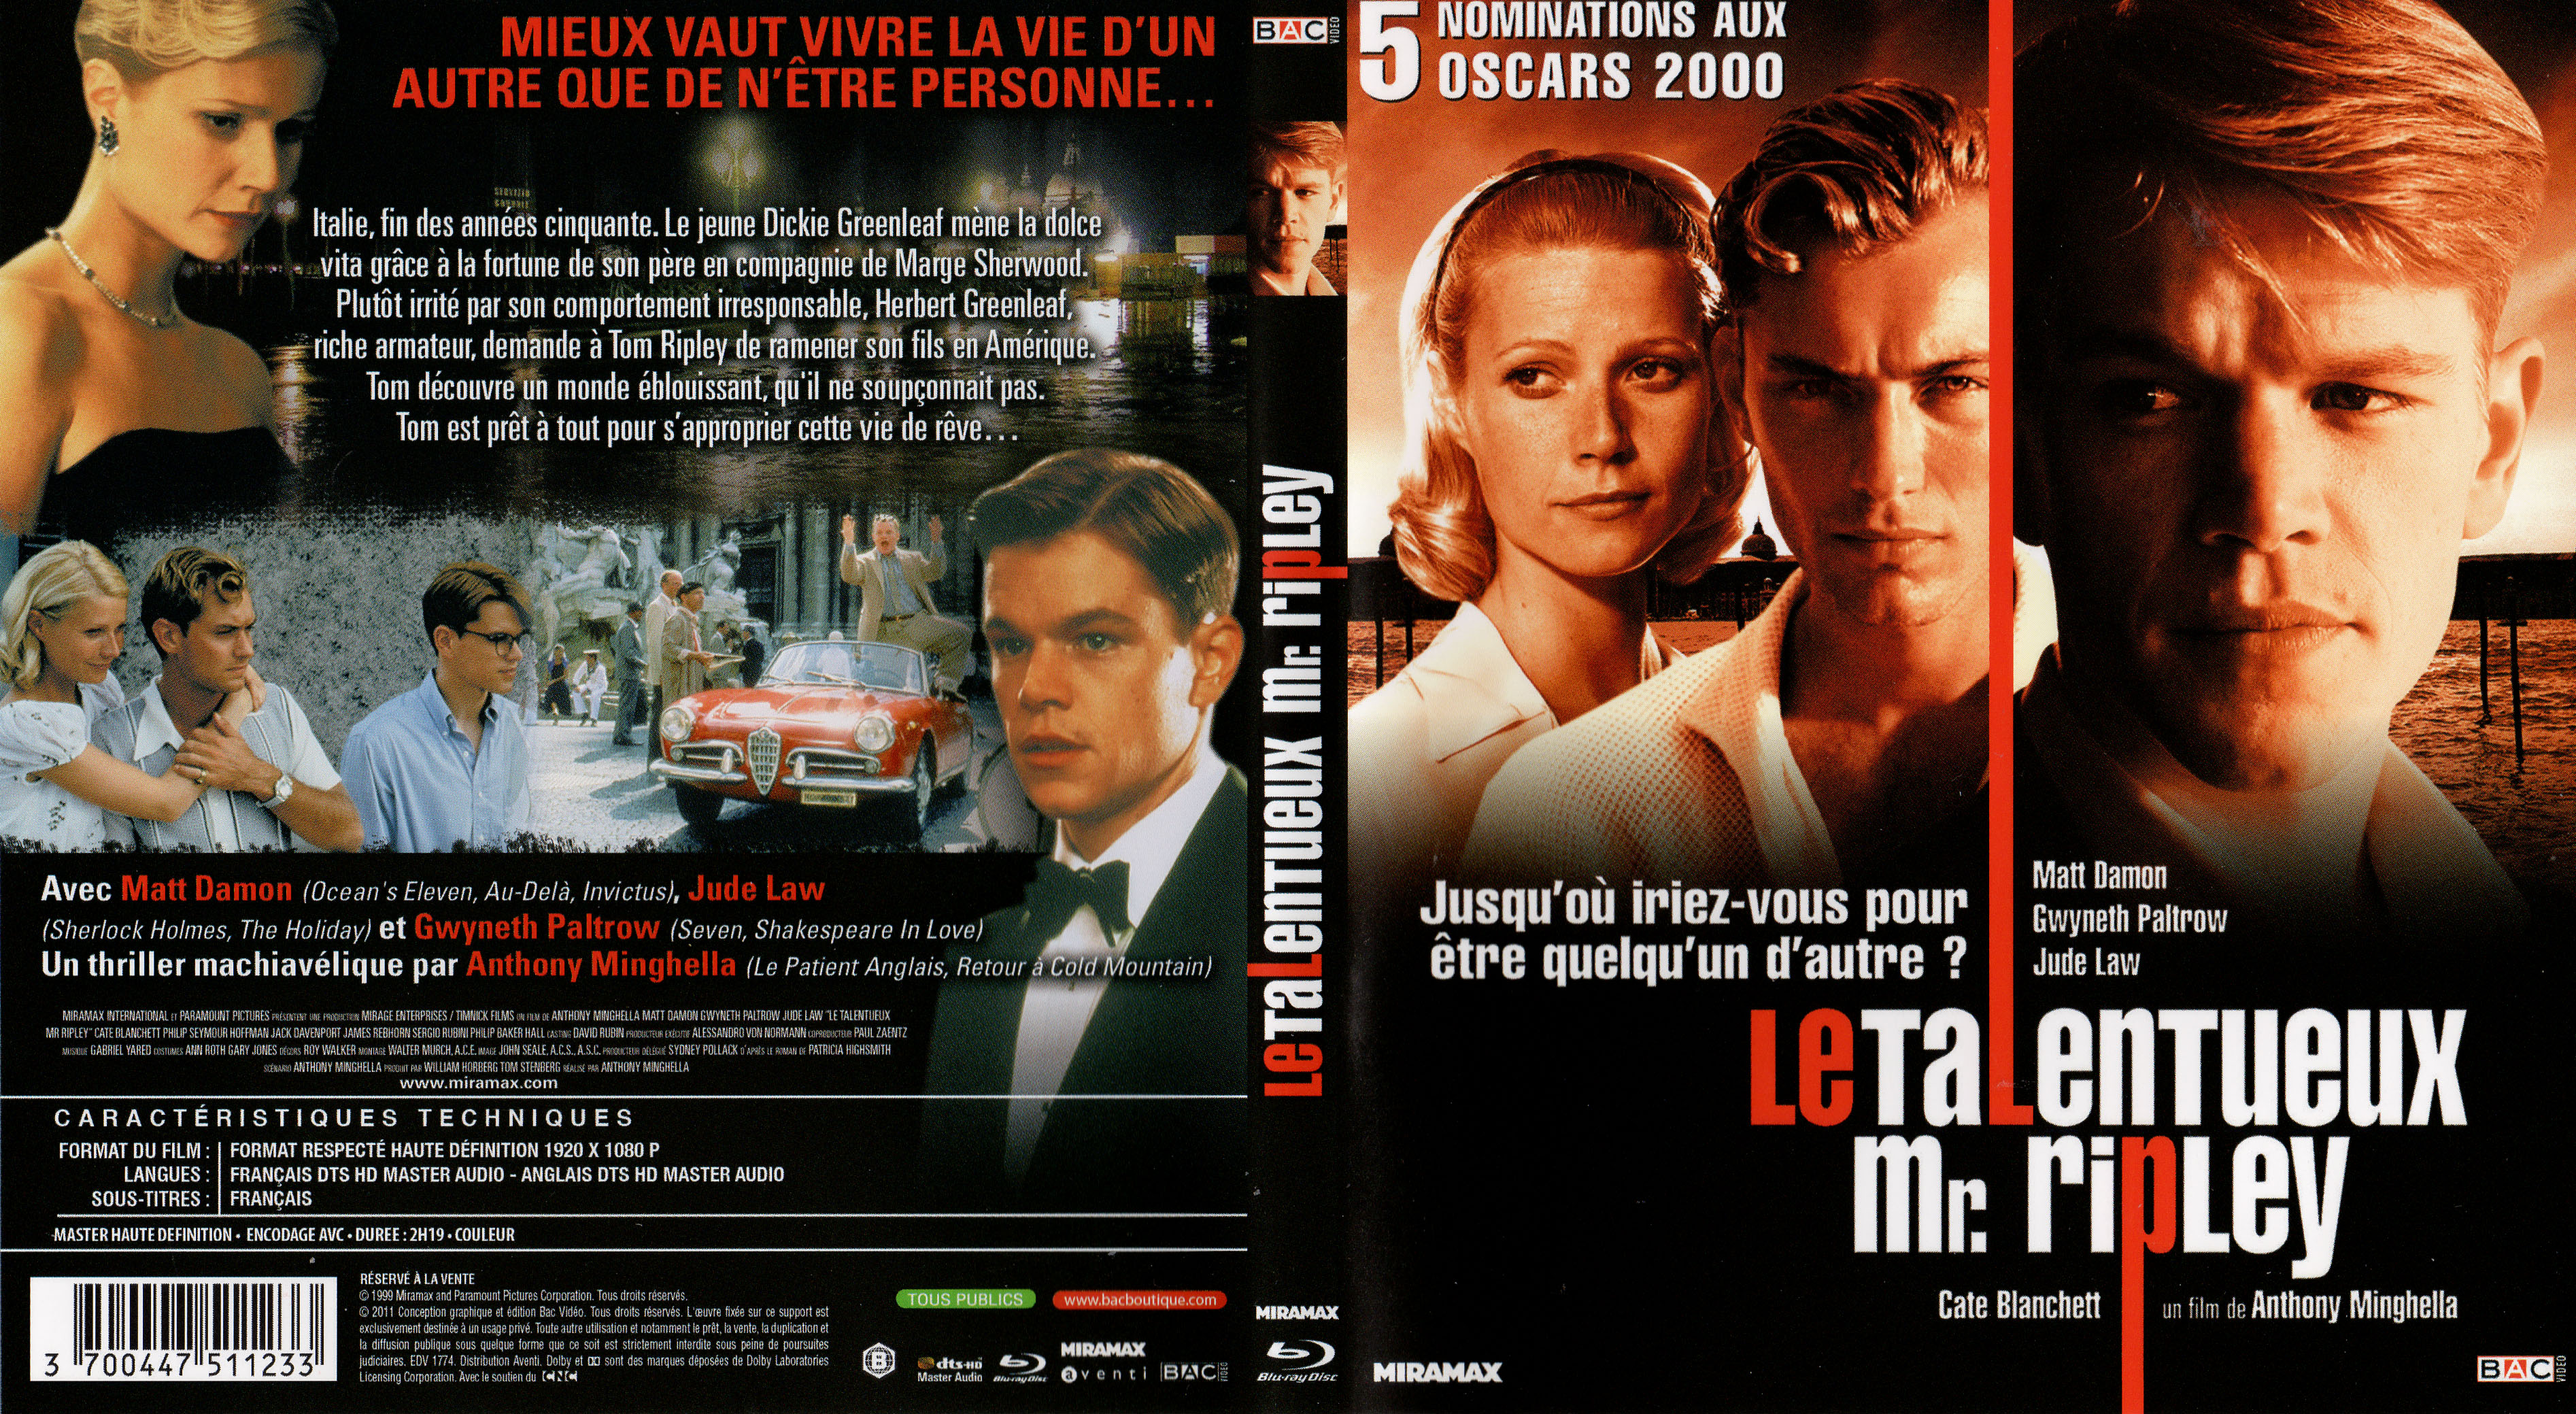 Jaquette DVD Le talentueux Mr Ripley (BLU-RAY)